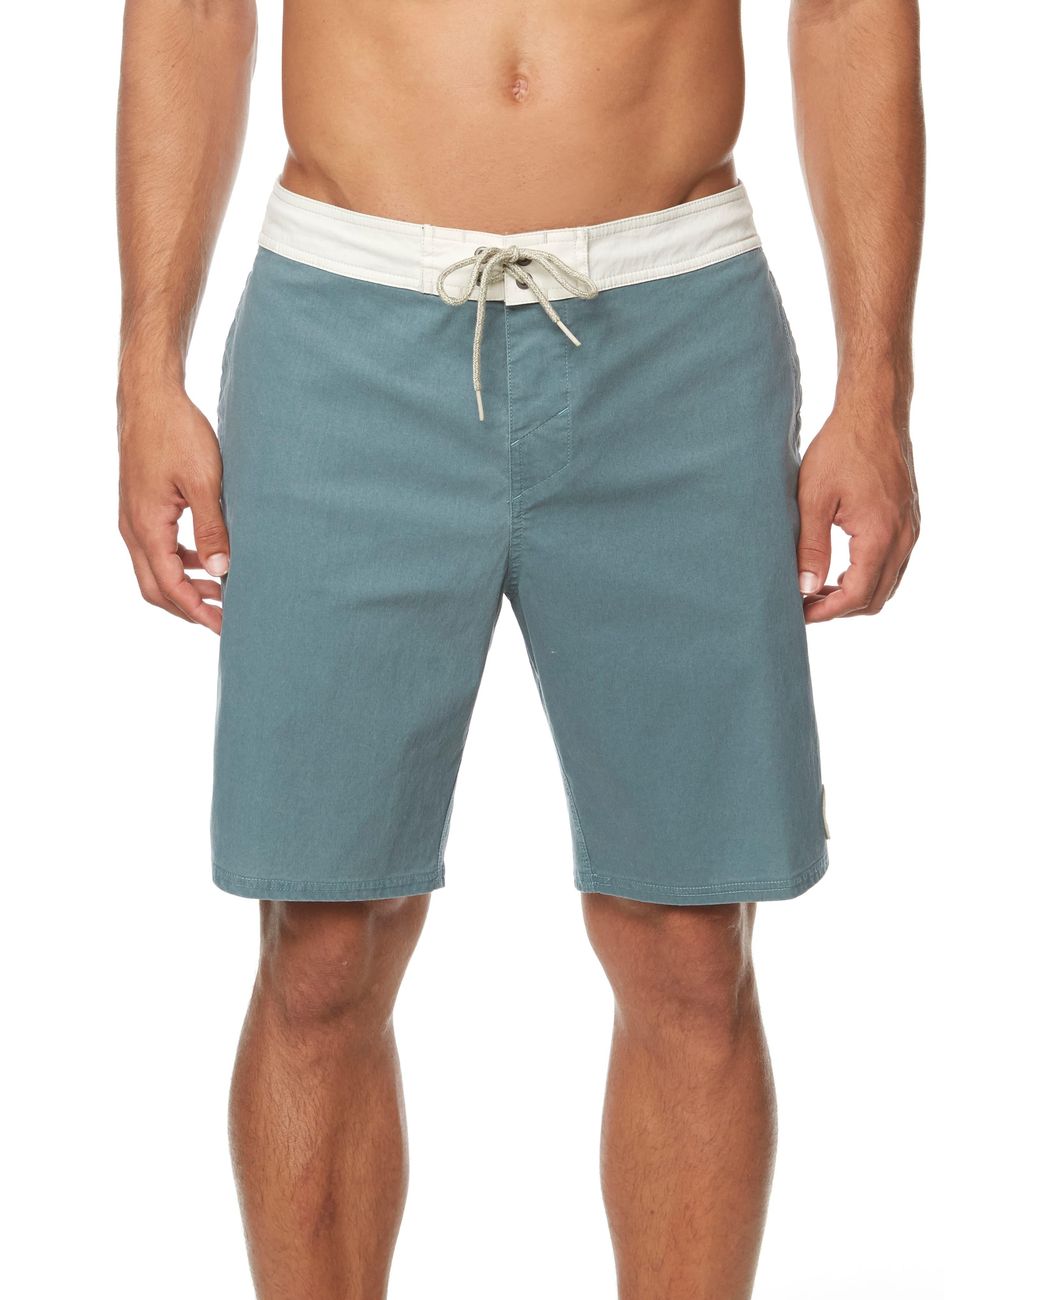 O'neill Sportswear Faded Cruzer Board Shorts in Blue for Men - Save 20% ...